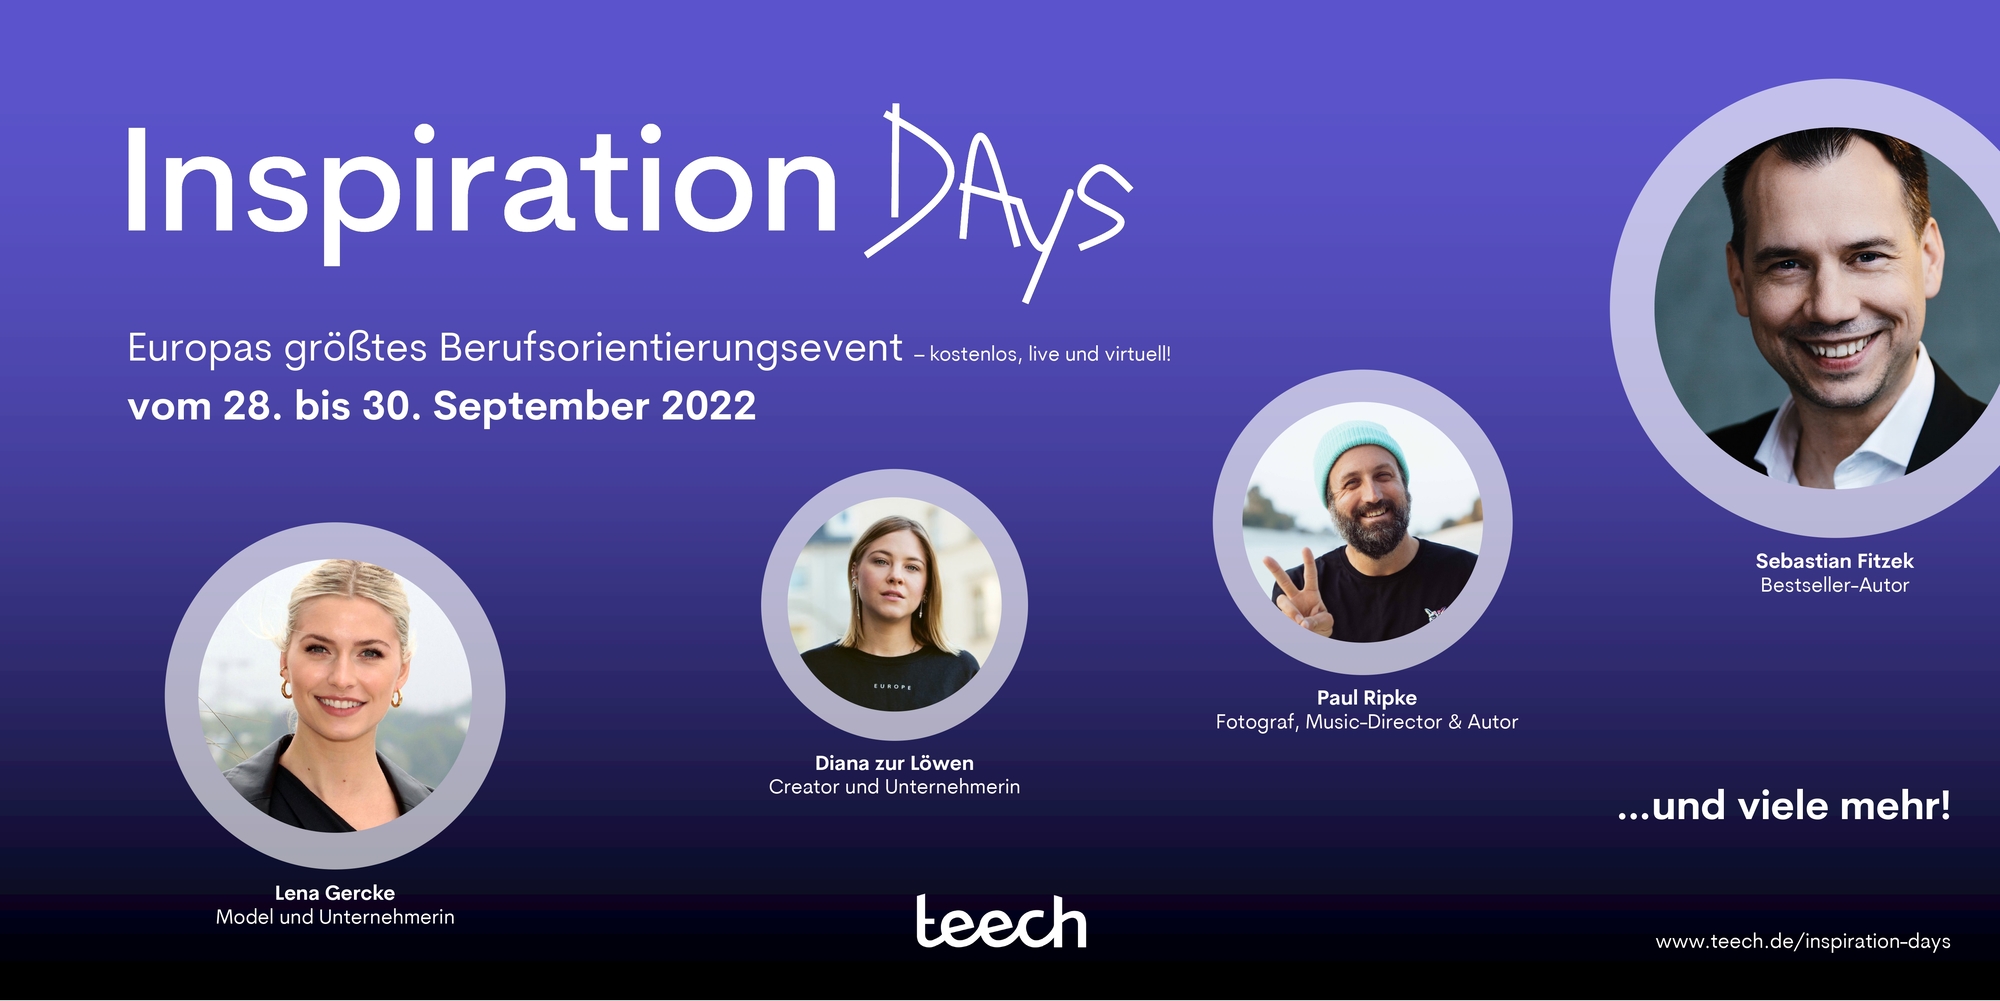 teech Inspiration Days 2022 Banner - Inspirations Days - Europas größtes Berufsorientierungsevent vom28. bis 30. September 2022